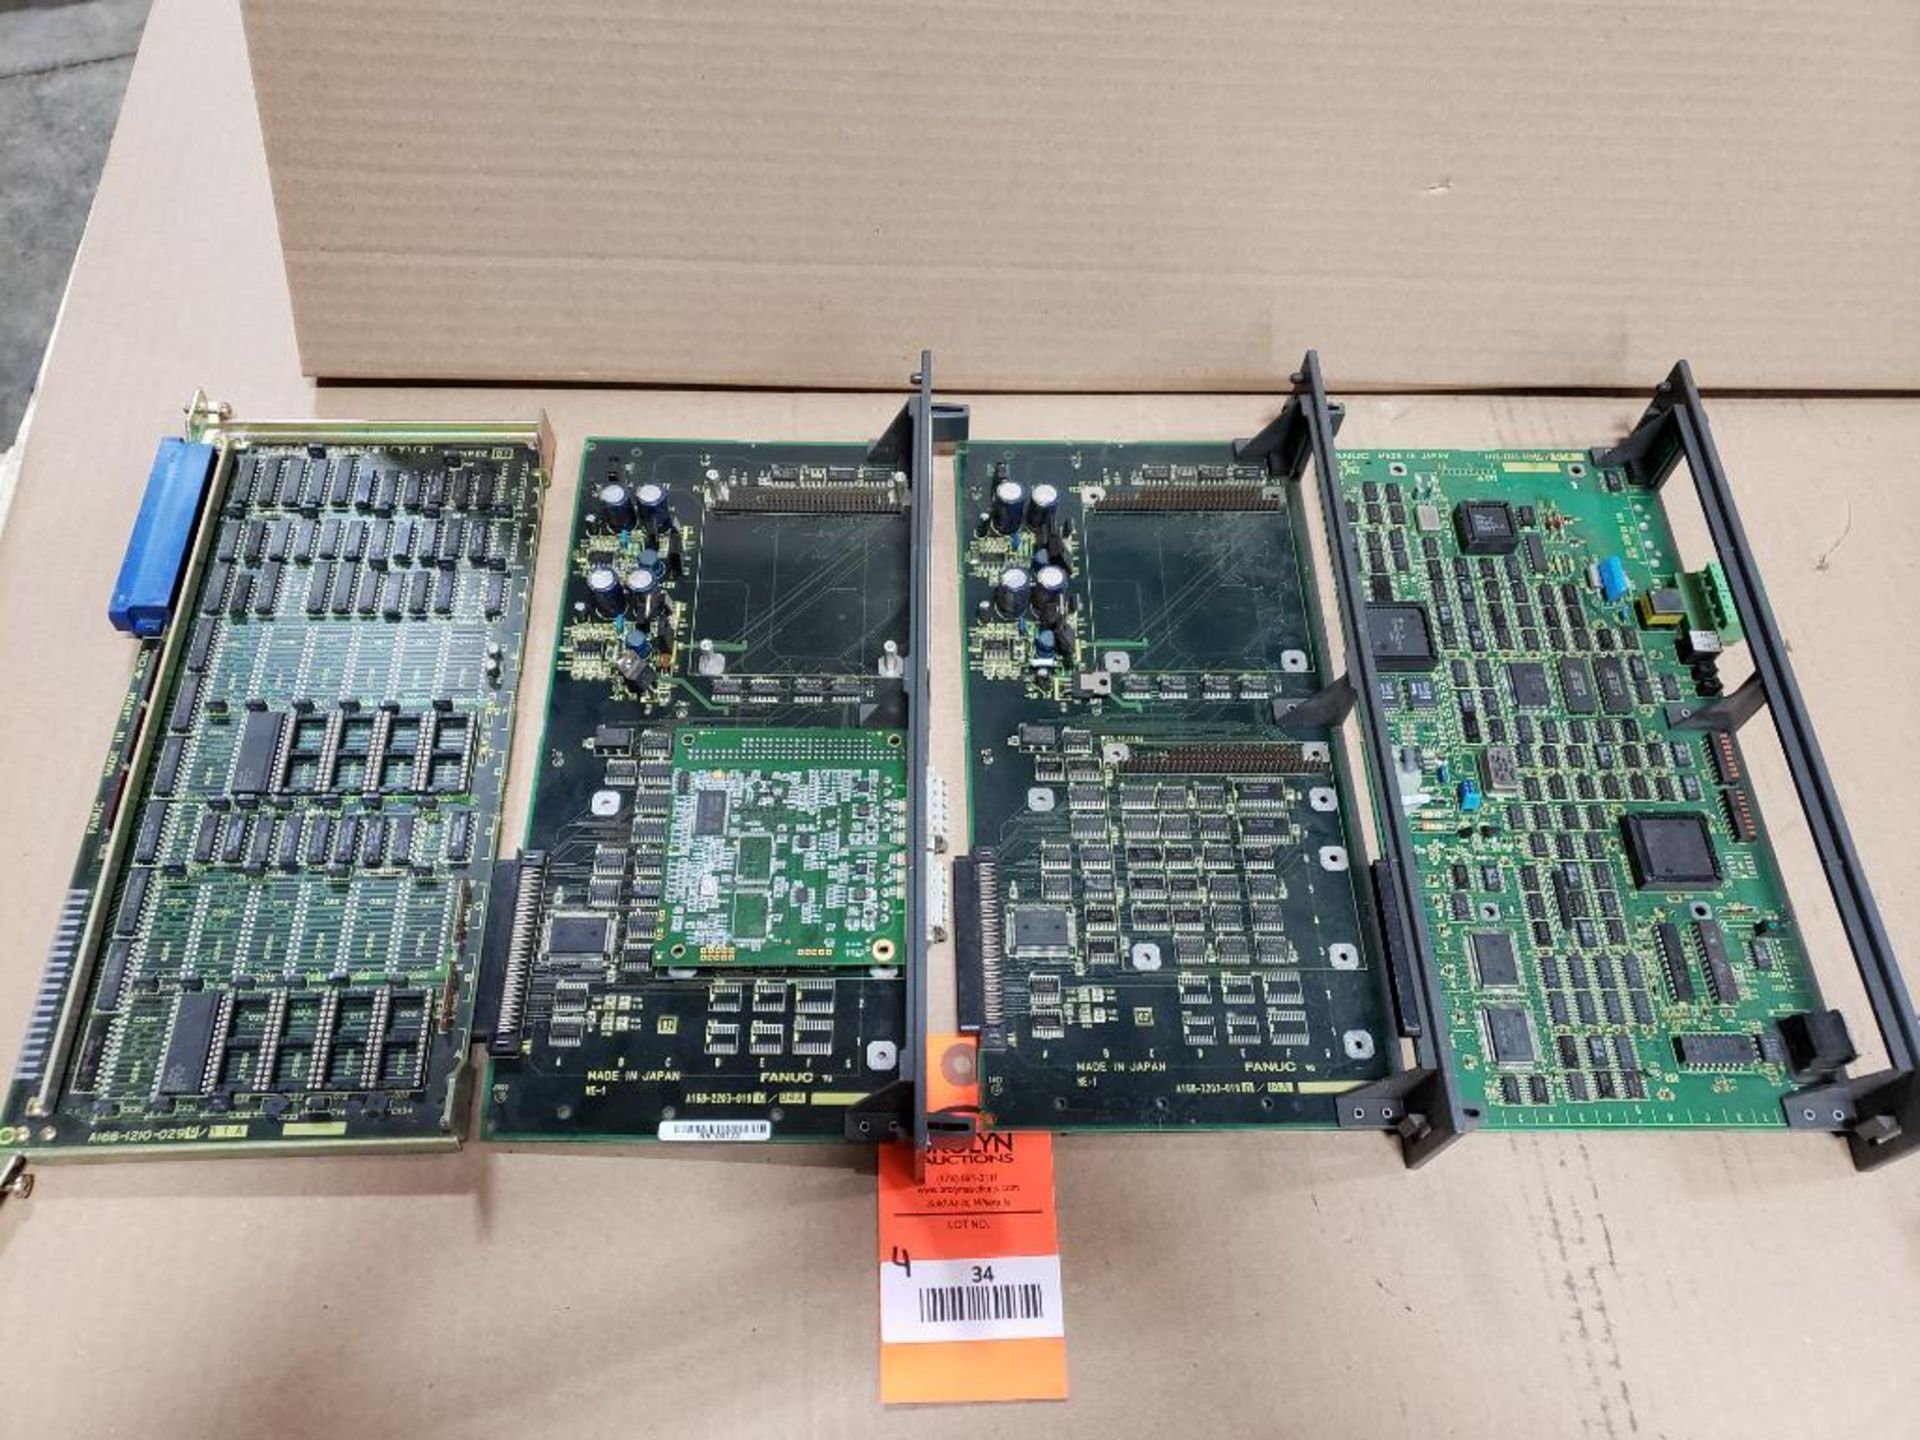 Qty 4 - Assorted Fanuc control boards.